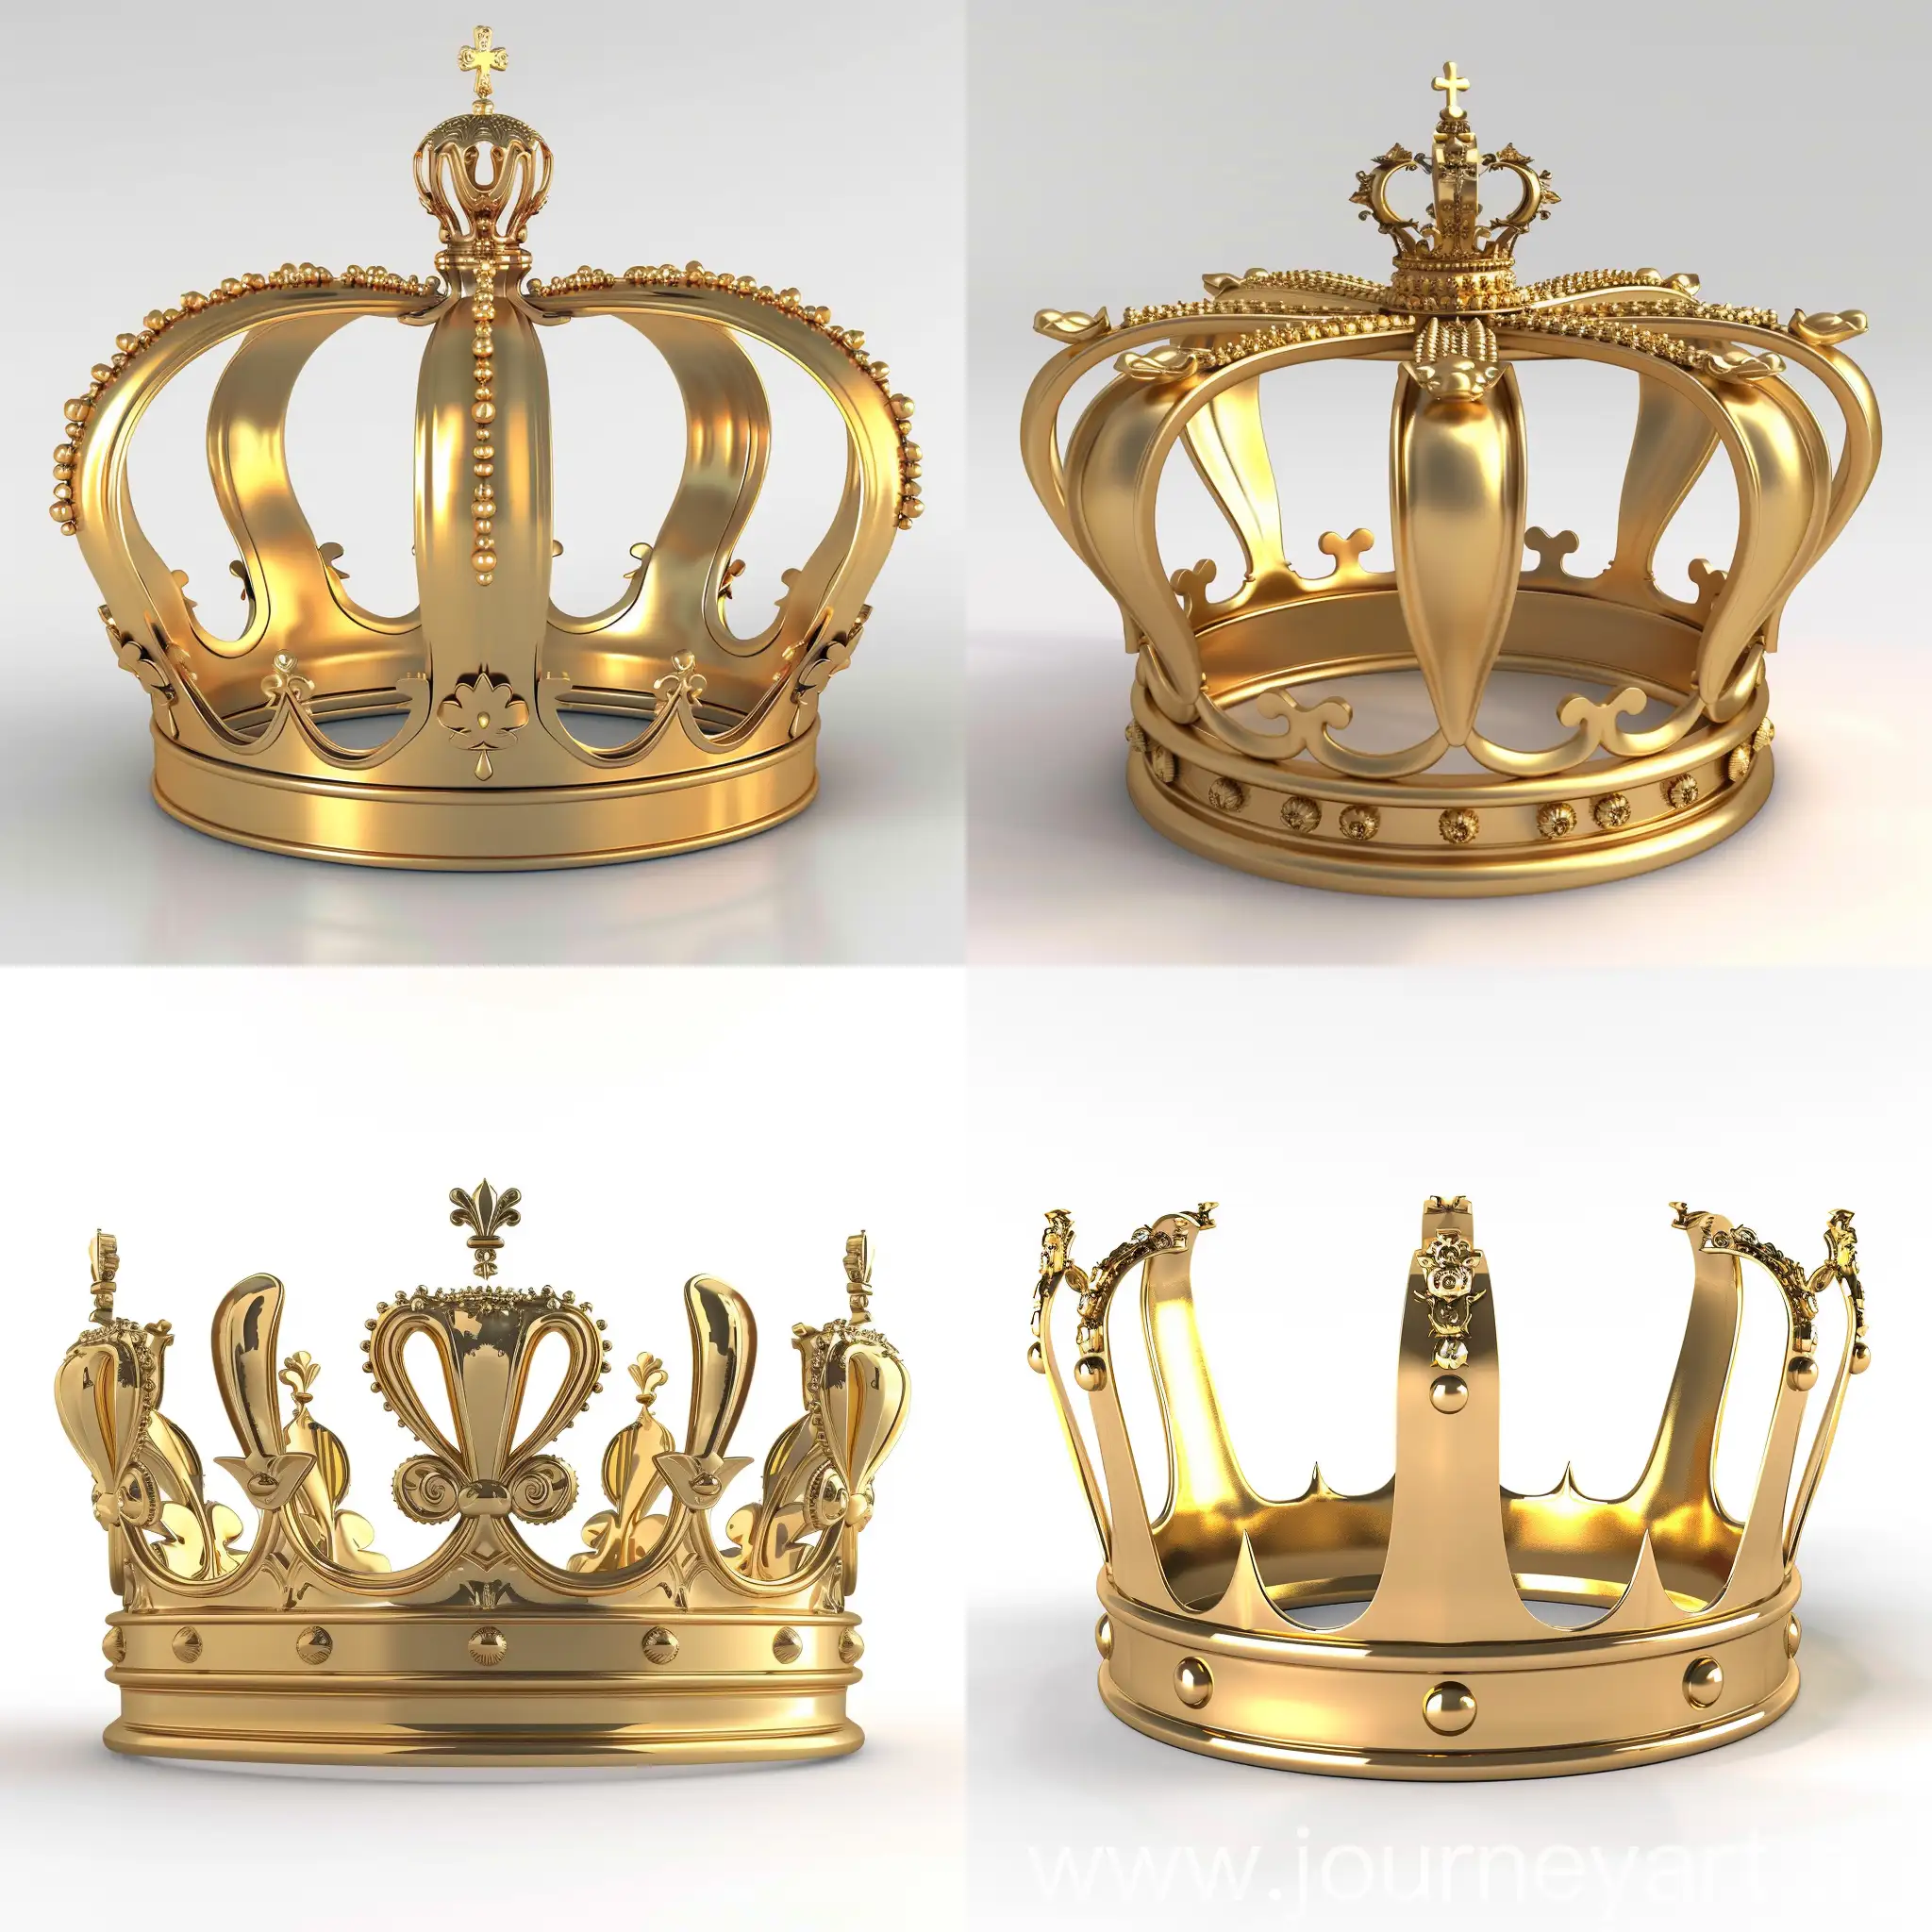 Golden-Crown-on-White-Background